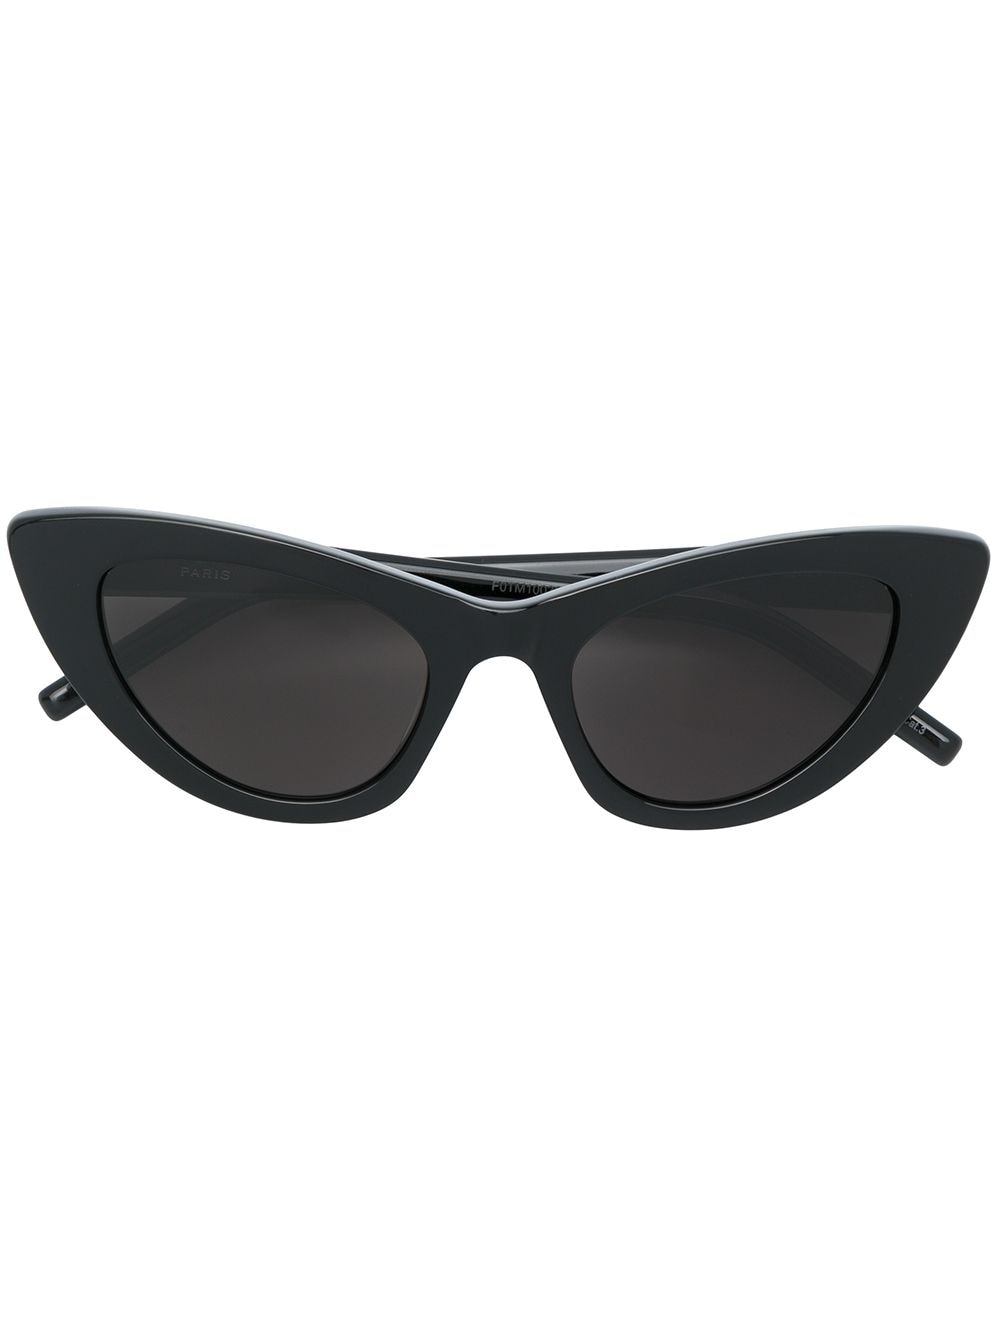 Saint Laurent Eyewear New Wave 213 Lily sunglasses - Black von Saint Laurent Eyewear